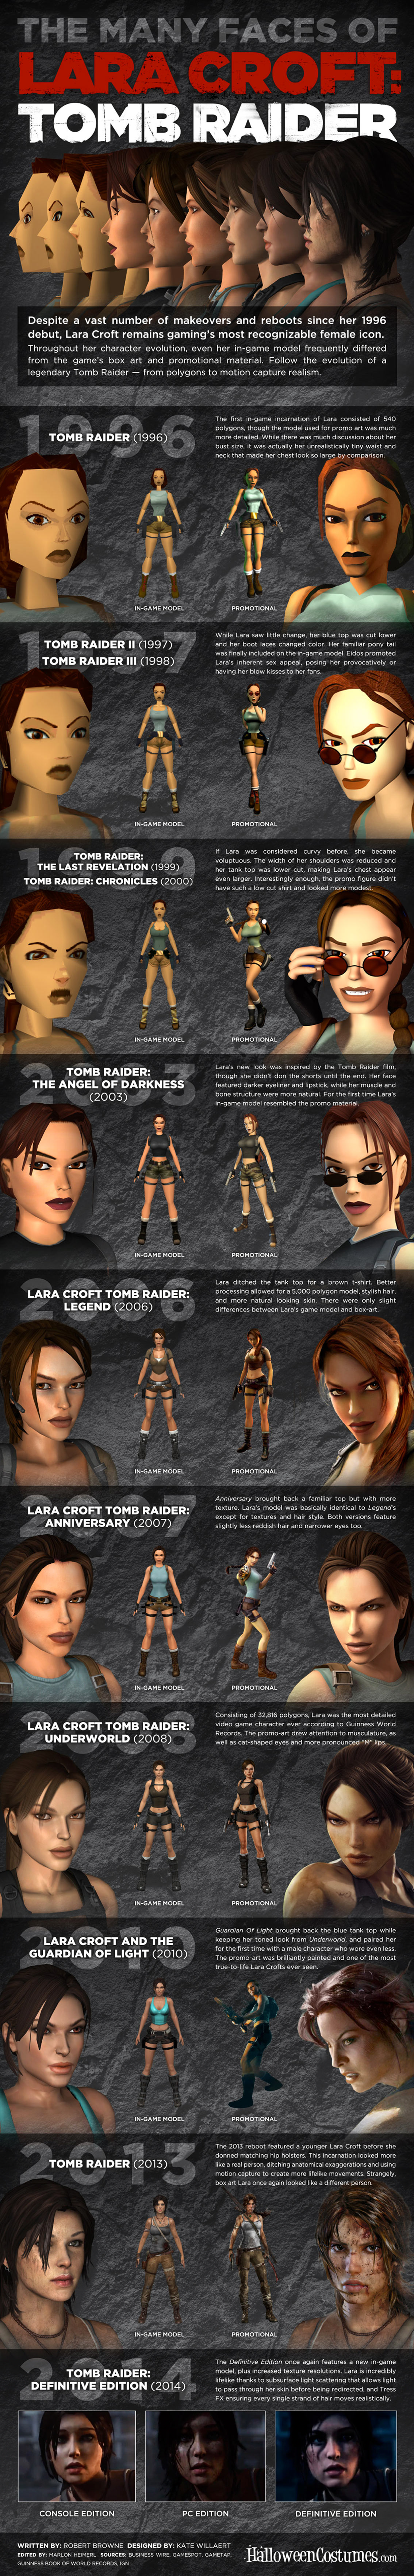 Many Faces of Lara Croft Tomb Raider Infographic